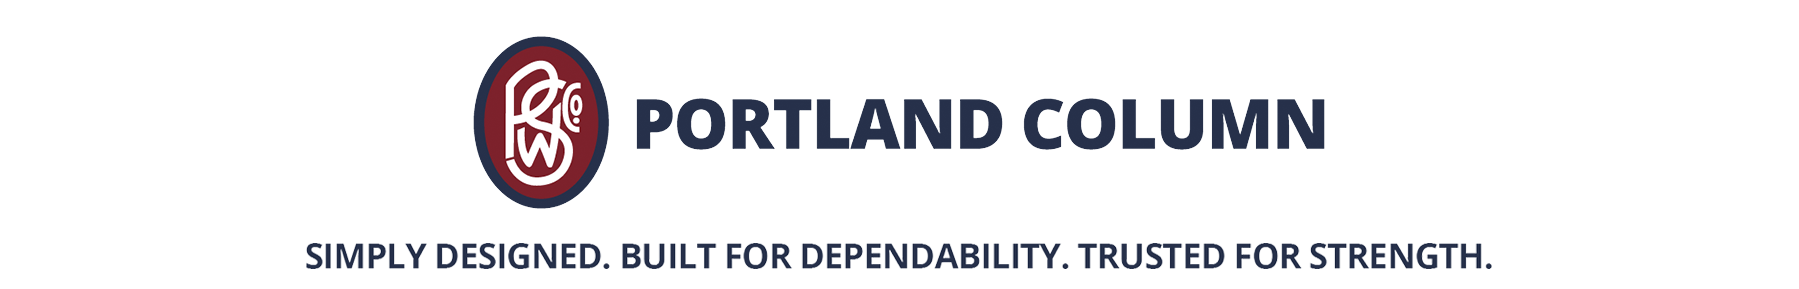 Portland Column Logo